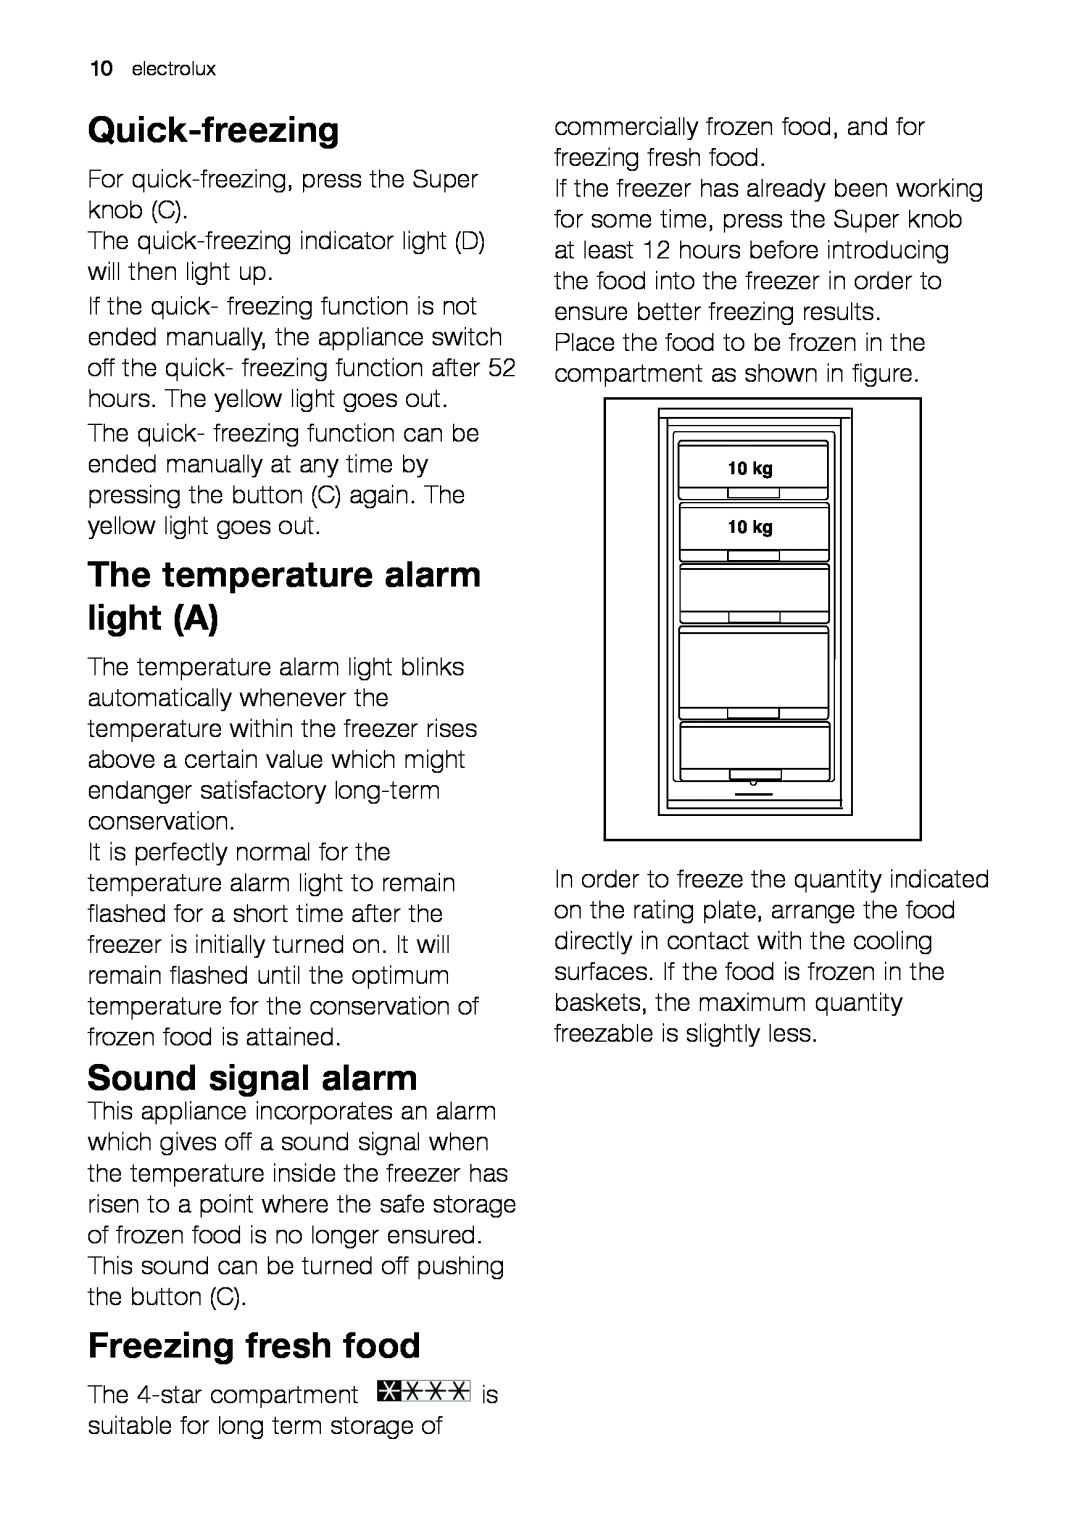 Electrolux EUC 19291 W manual Quick-freezing, The temperature alarm light A, Sound signal alarm, Freezing fresh food 